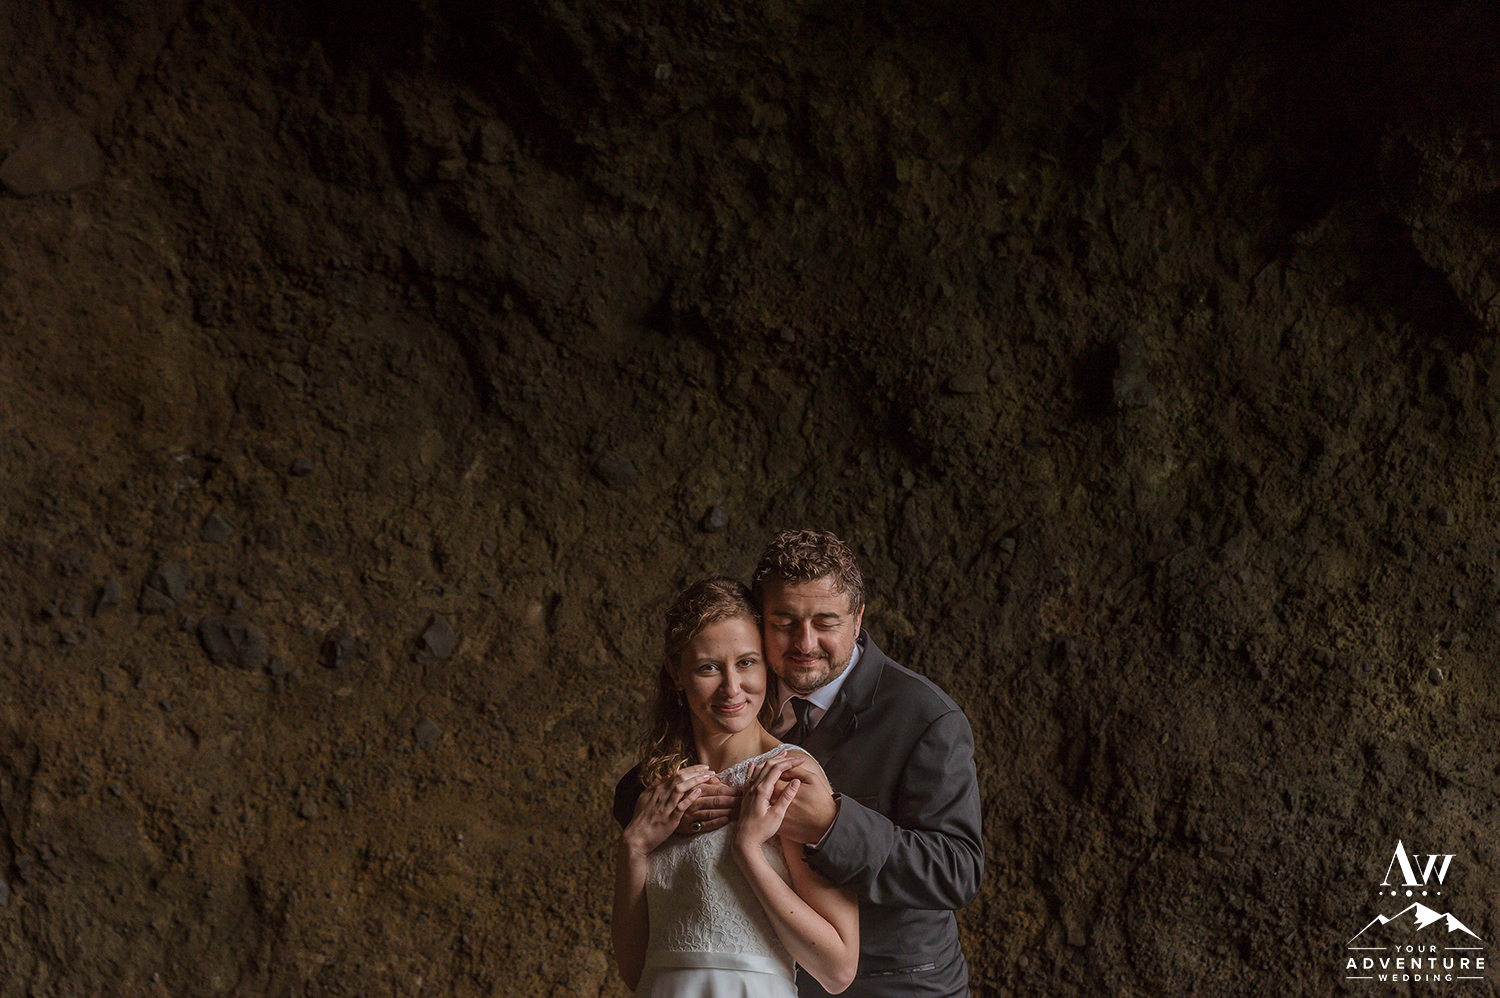 Icelandic Wedding Photos - Your Adventure Wedding